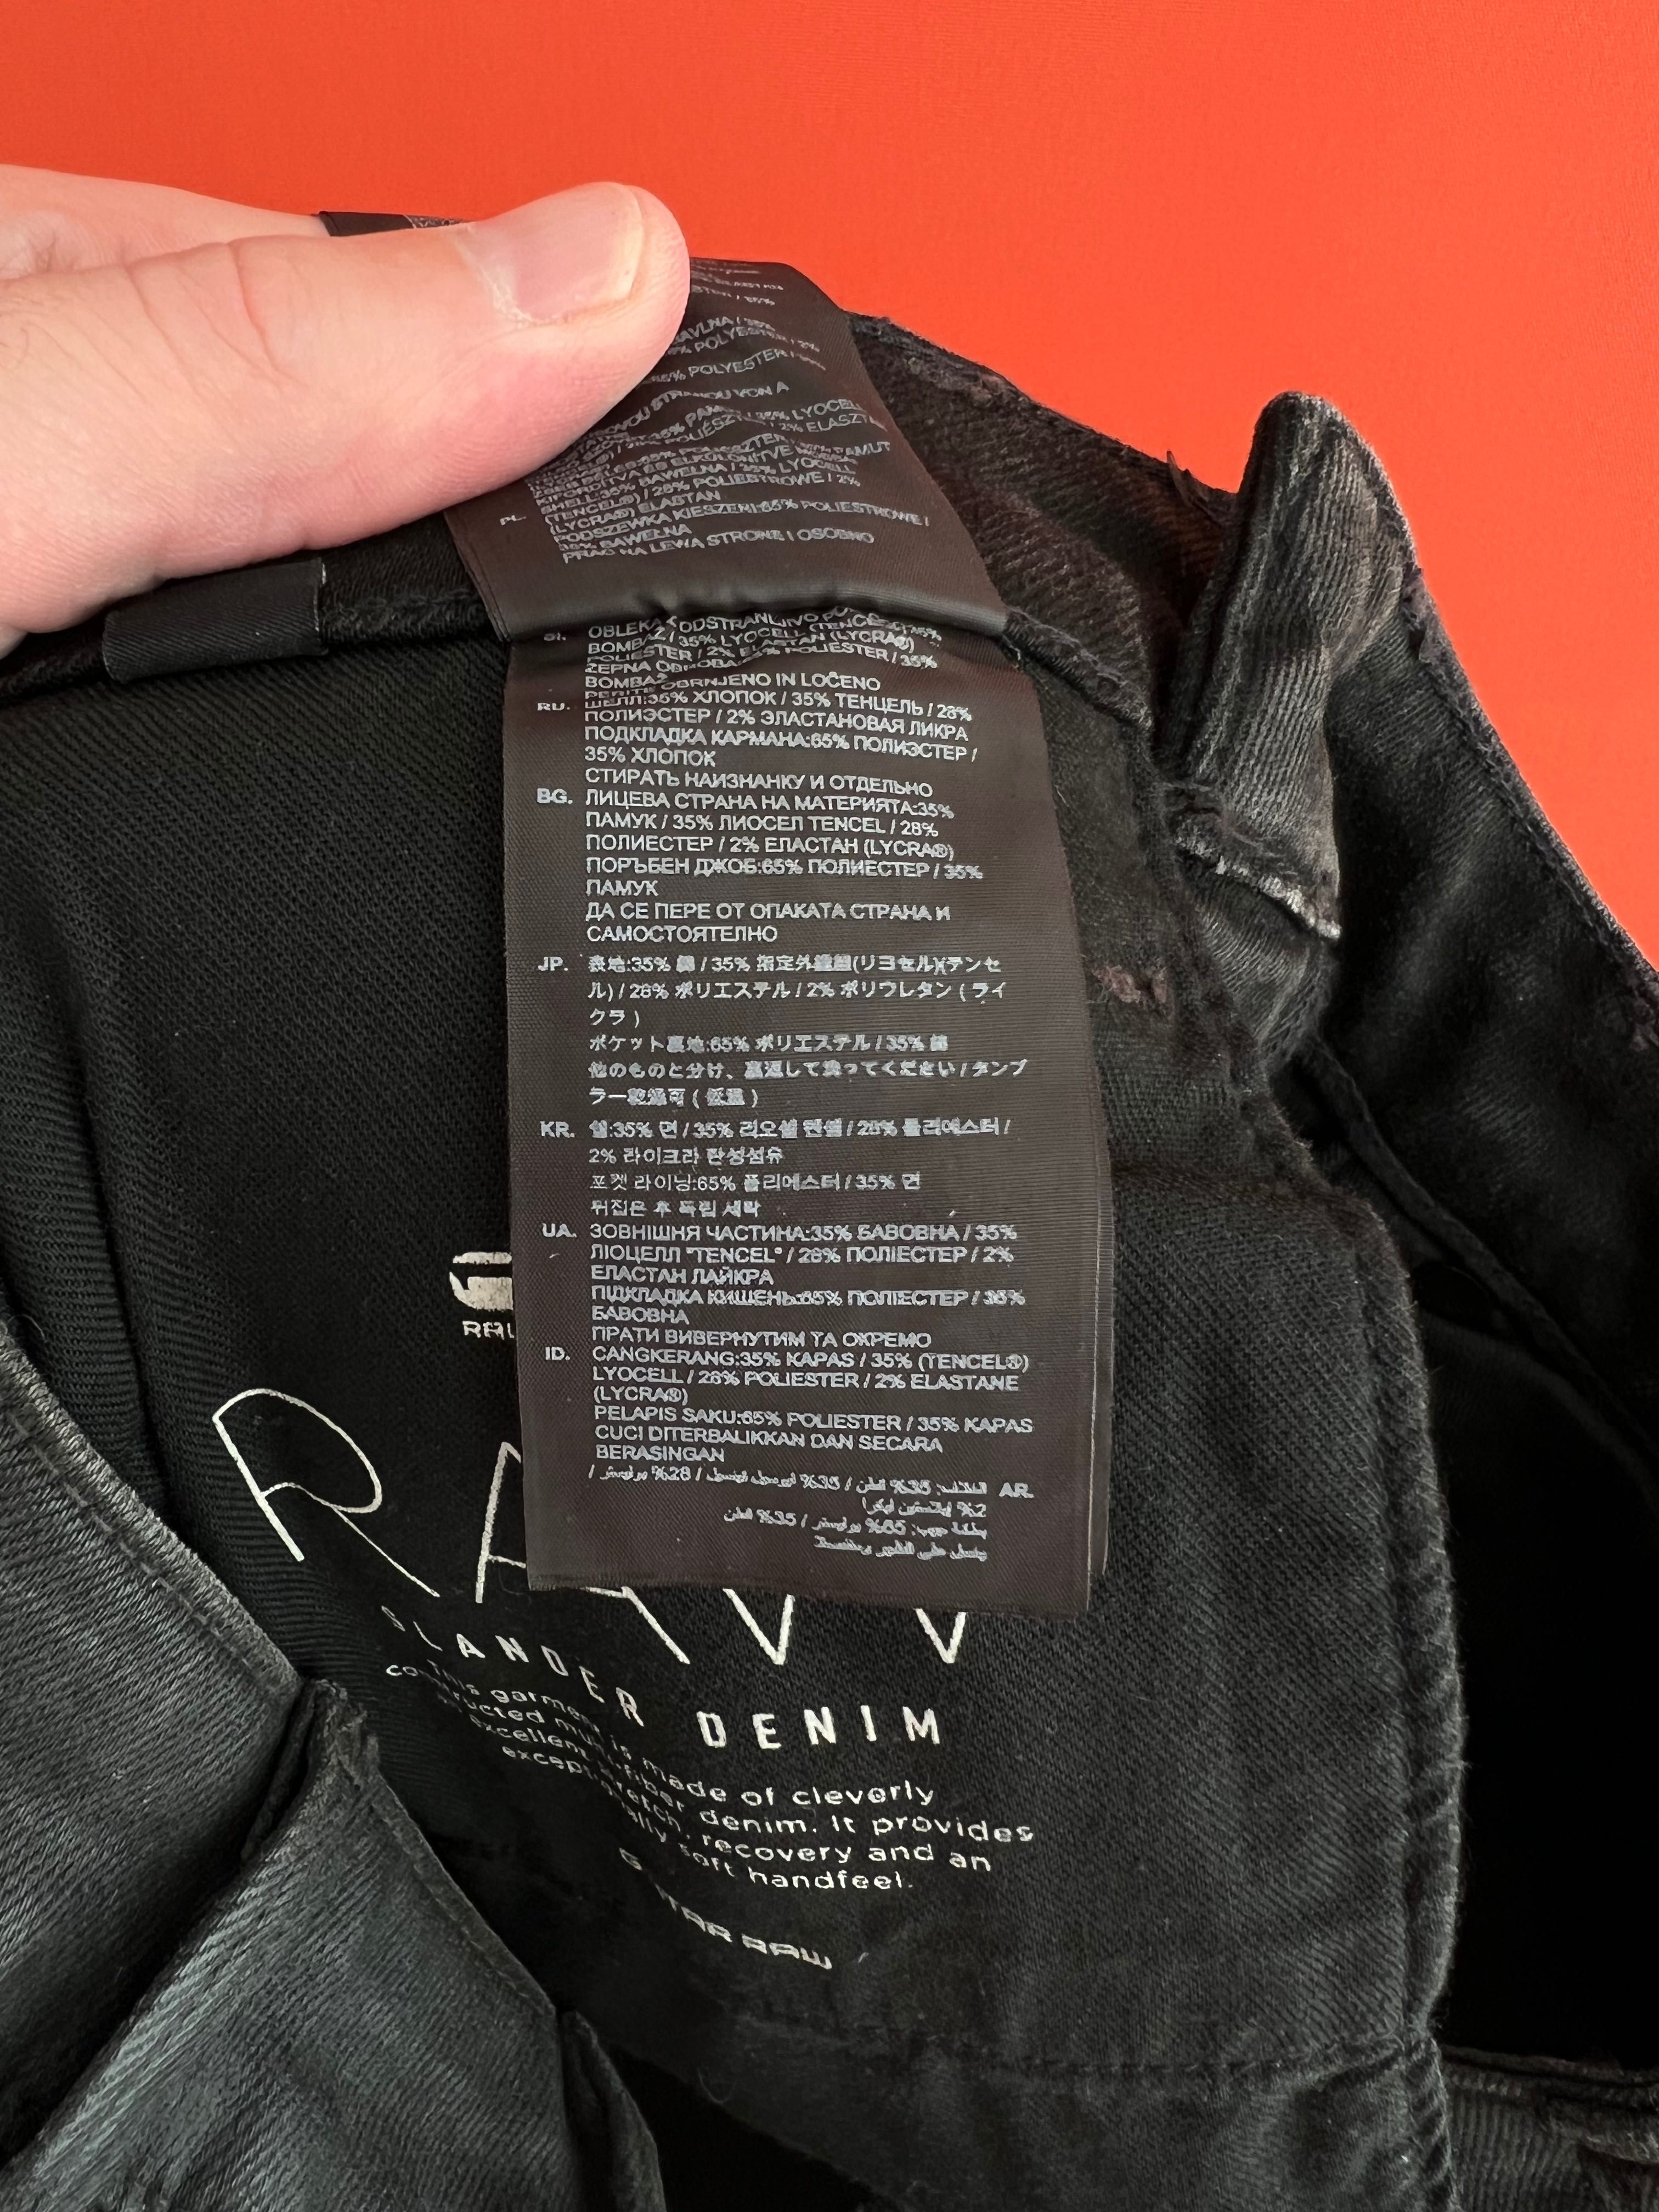 G-Star Raw 5620 Skinny оригинал женские джинсы скинни размер 26 Б У